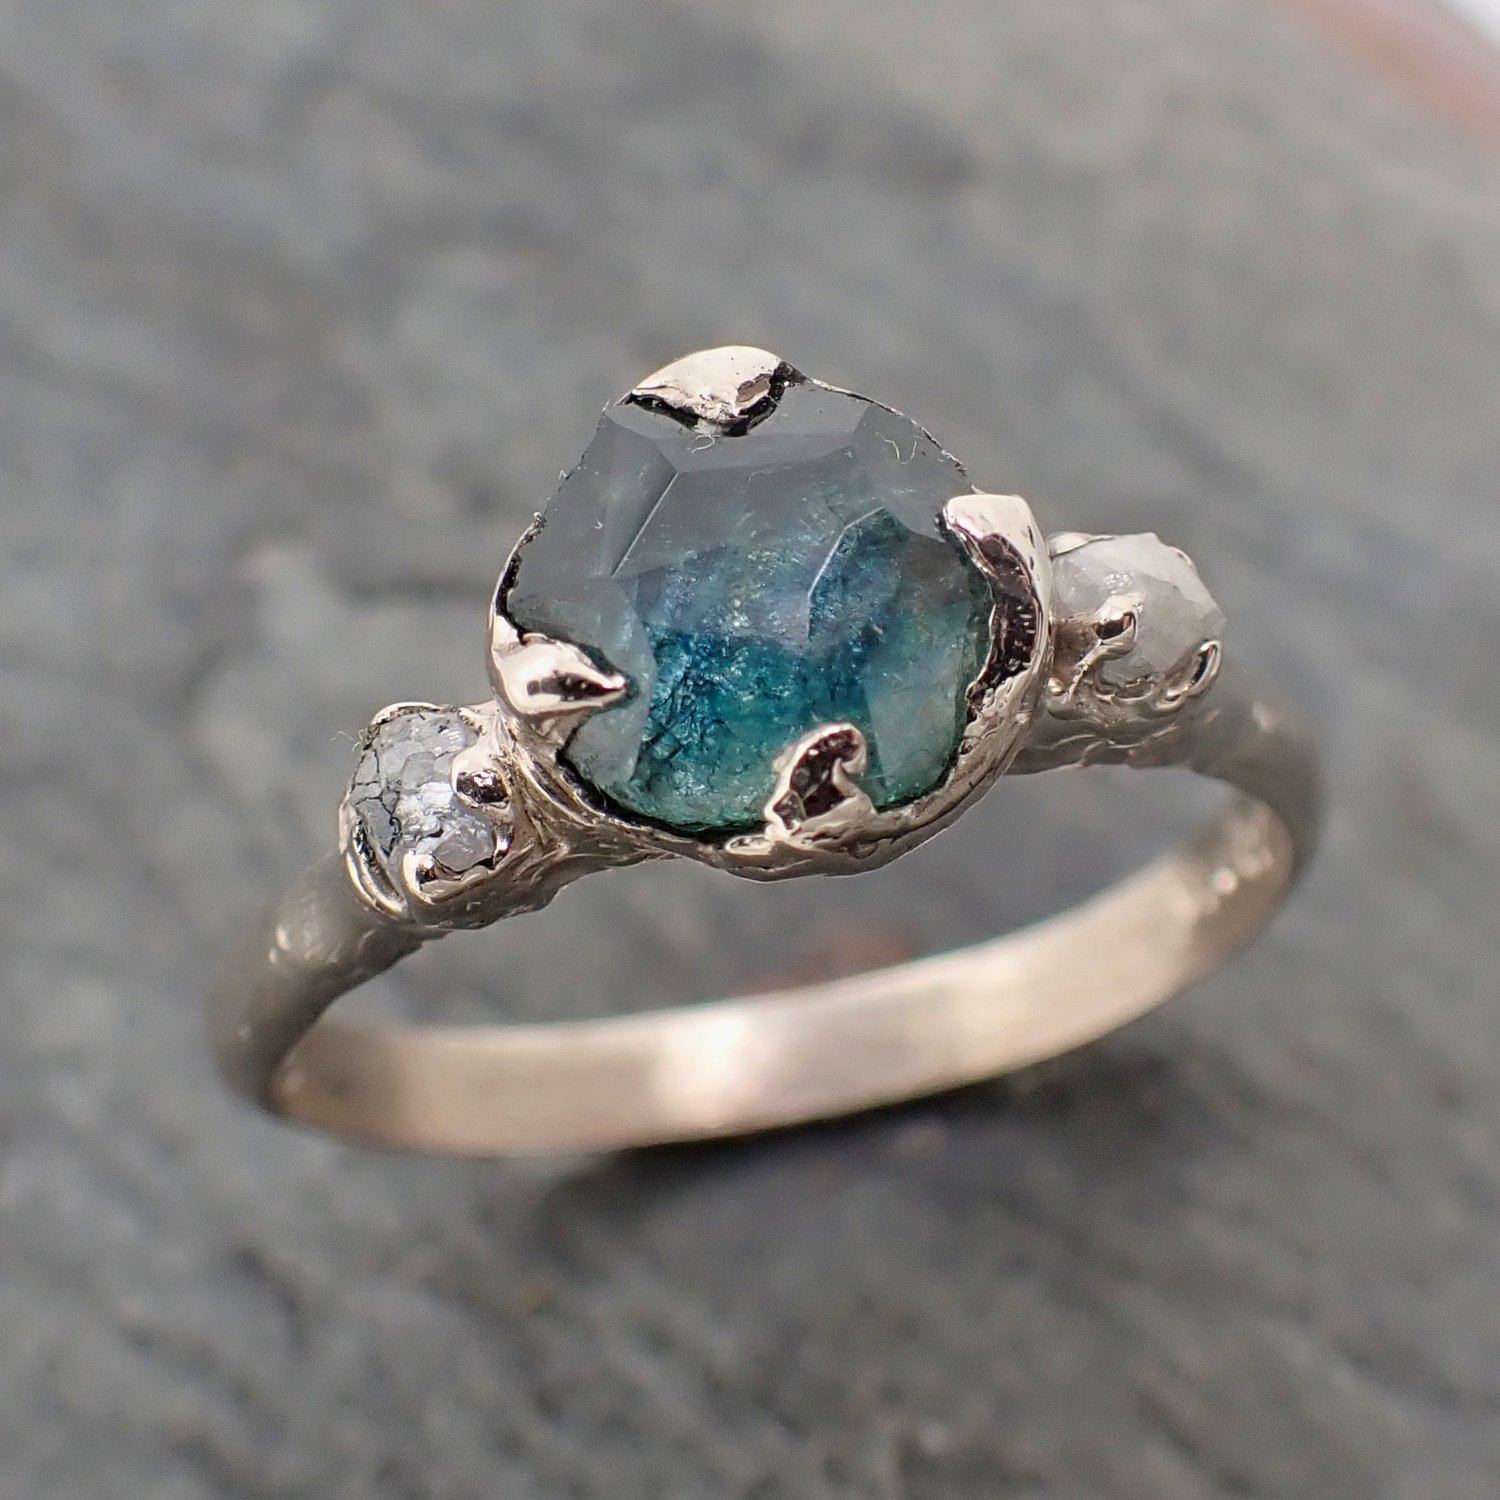 partially faceted montana sapphire diamond 14k white gold engagement ring wedding ring custom blue gemstone ring multi stone ring 2292 Alternative Engagement